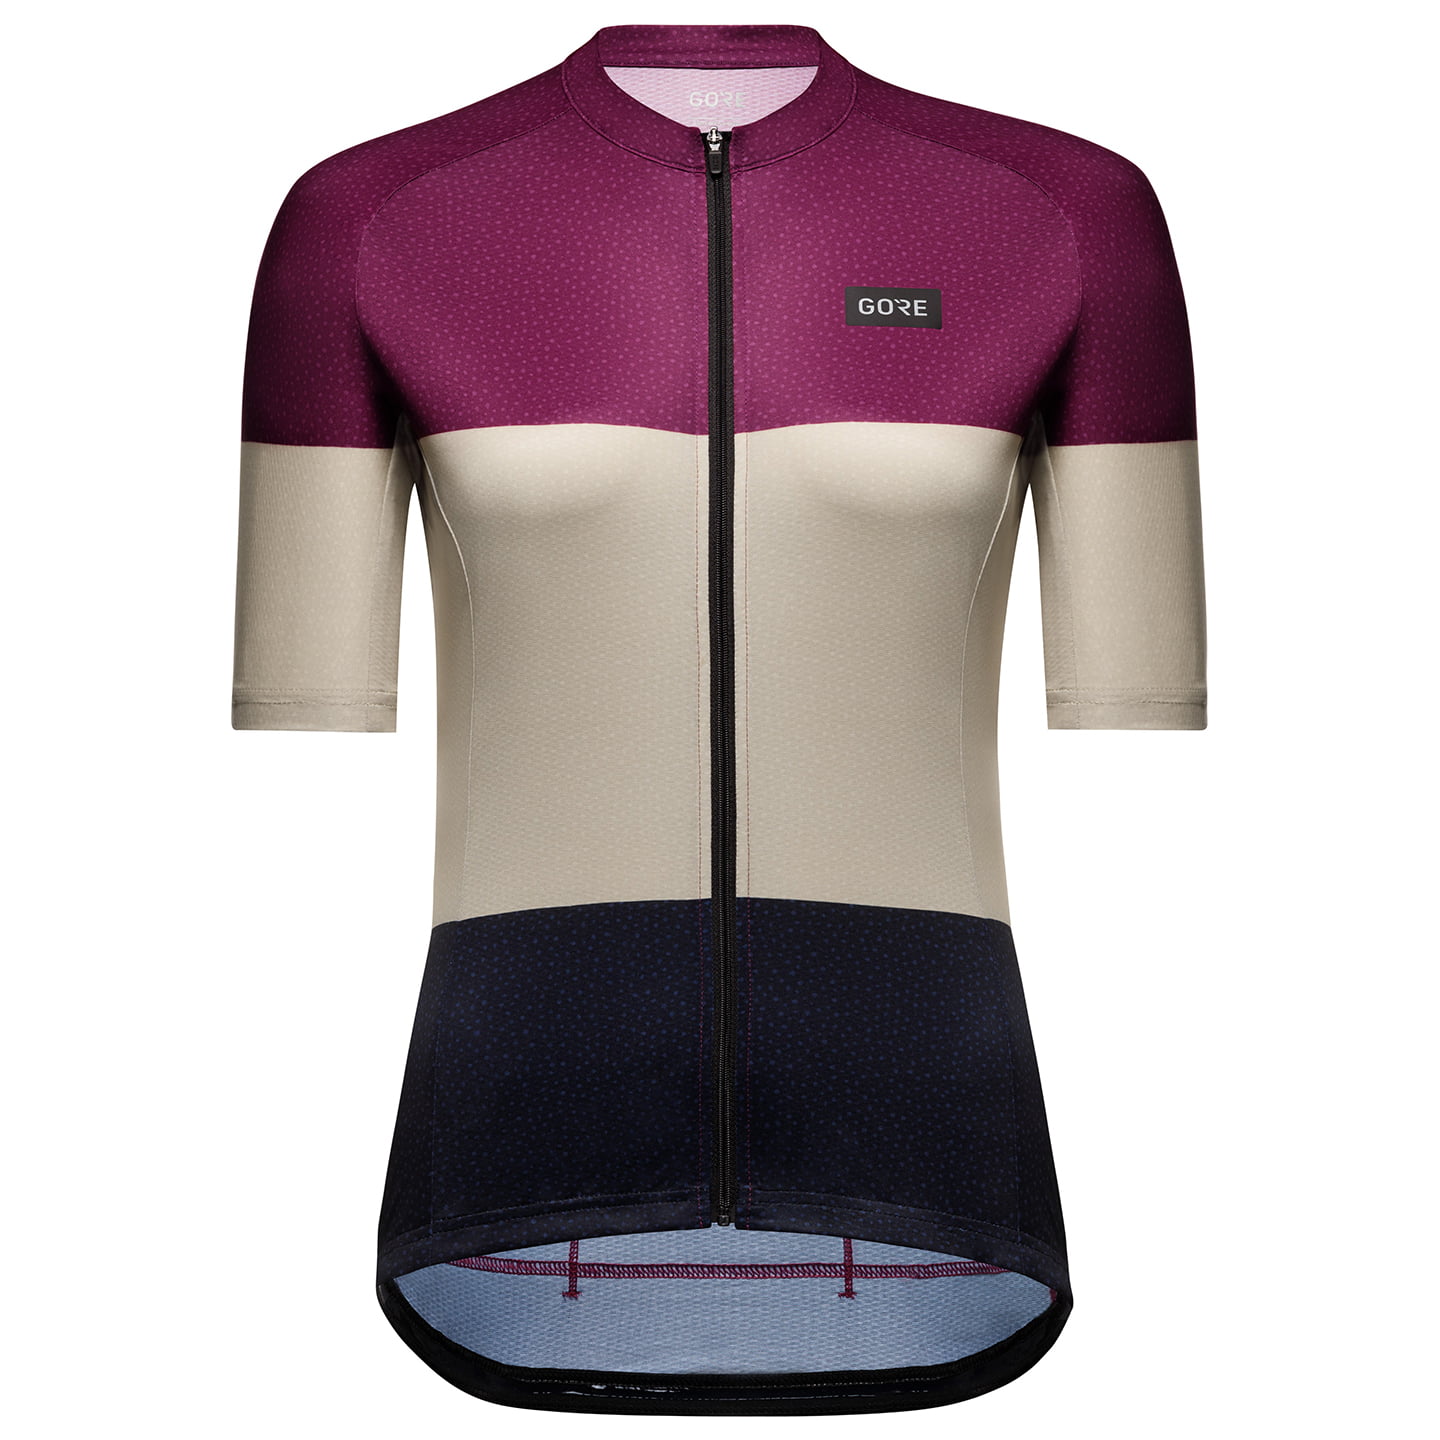 Spirit Stripes Women’s Jersey Women’s Short Sleeve Jersey, size 40, Cycle shirt, Bike clothing